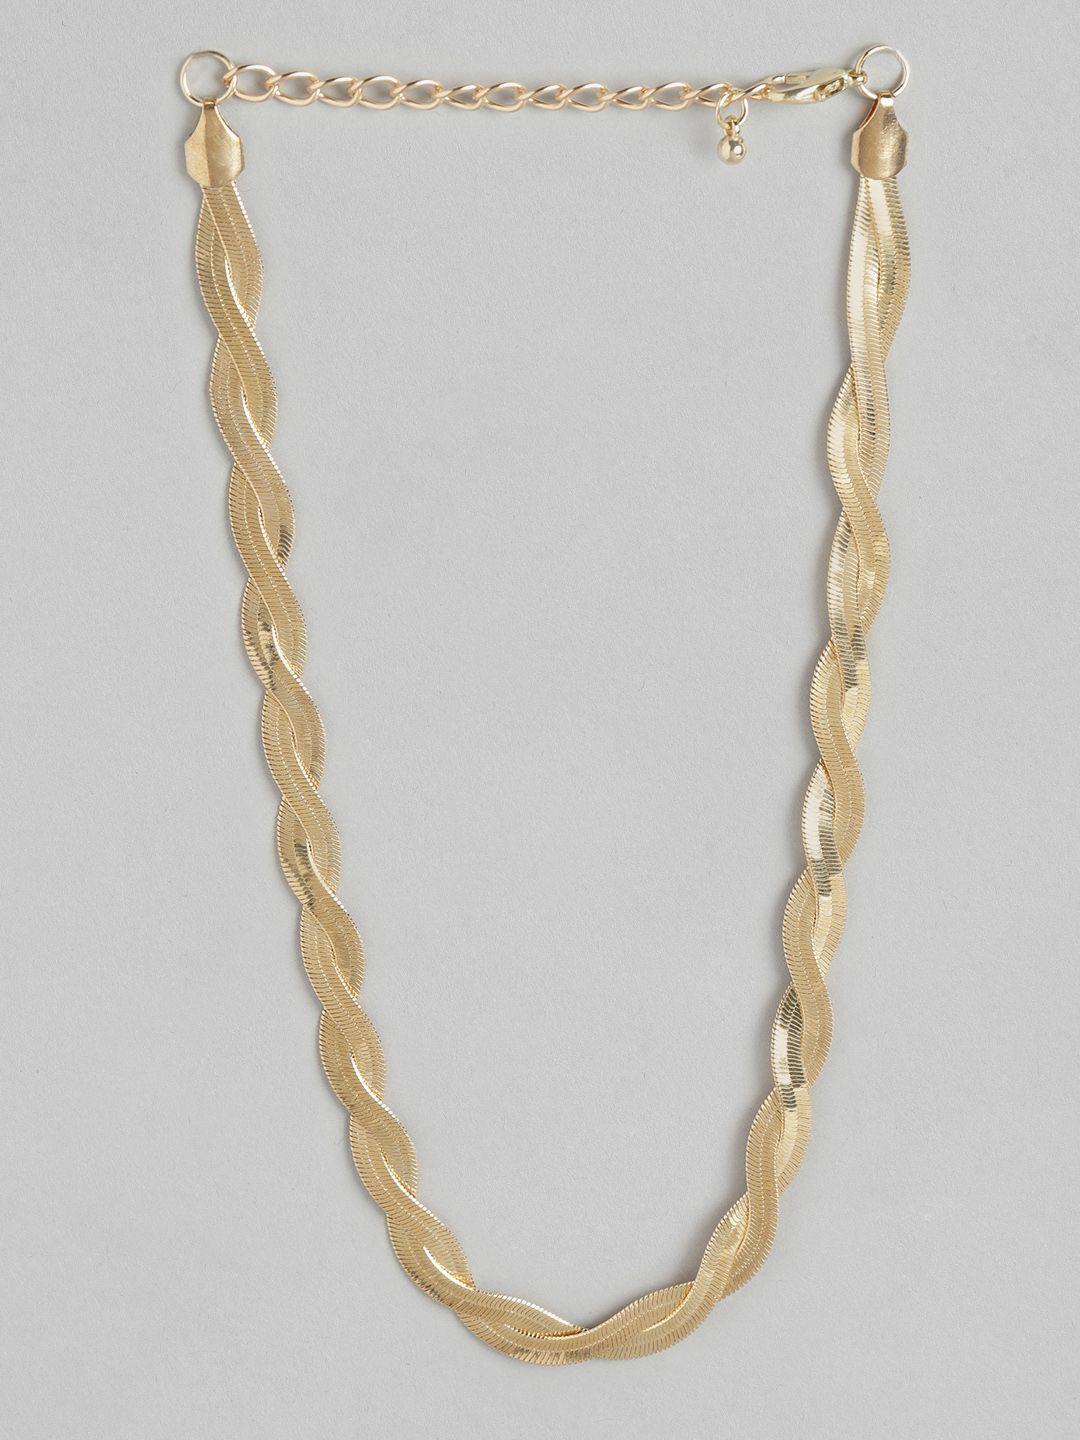 carlton london gold-plated layered chain